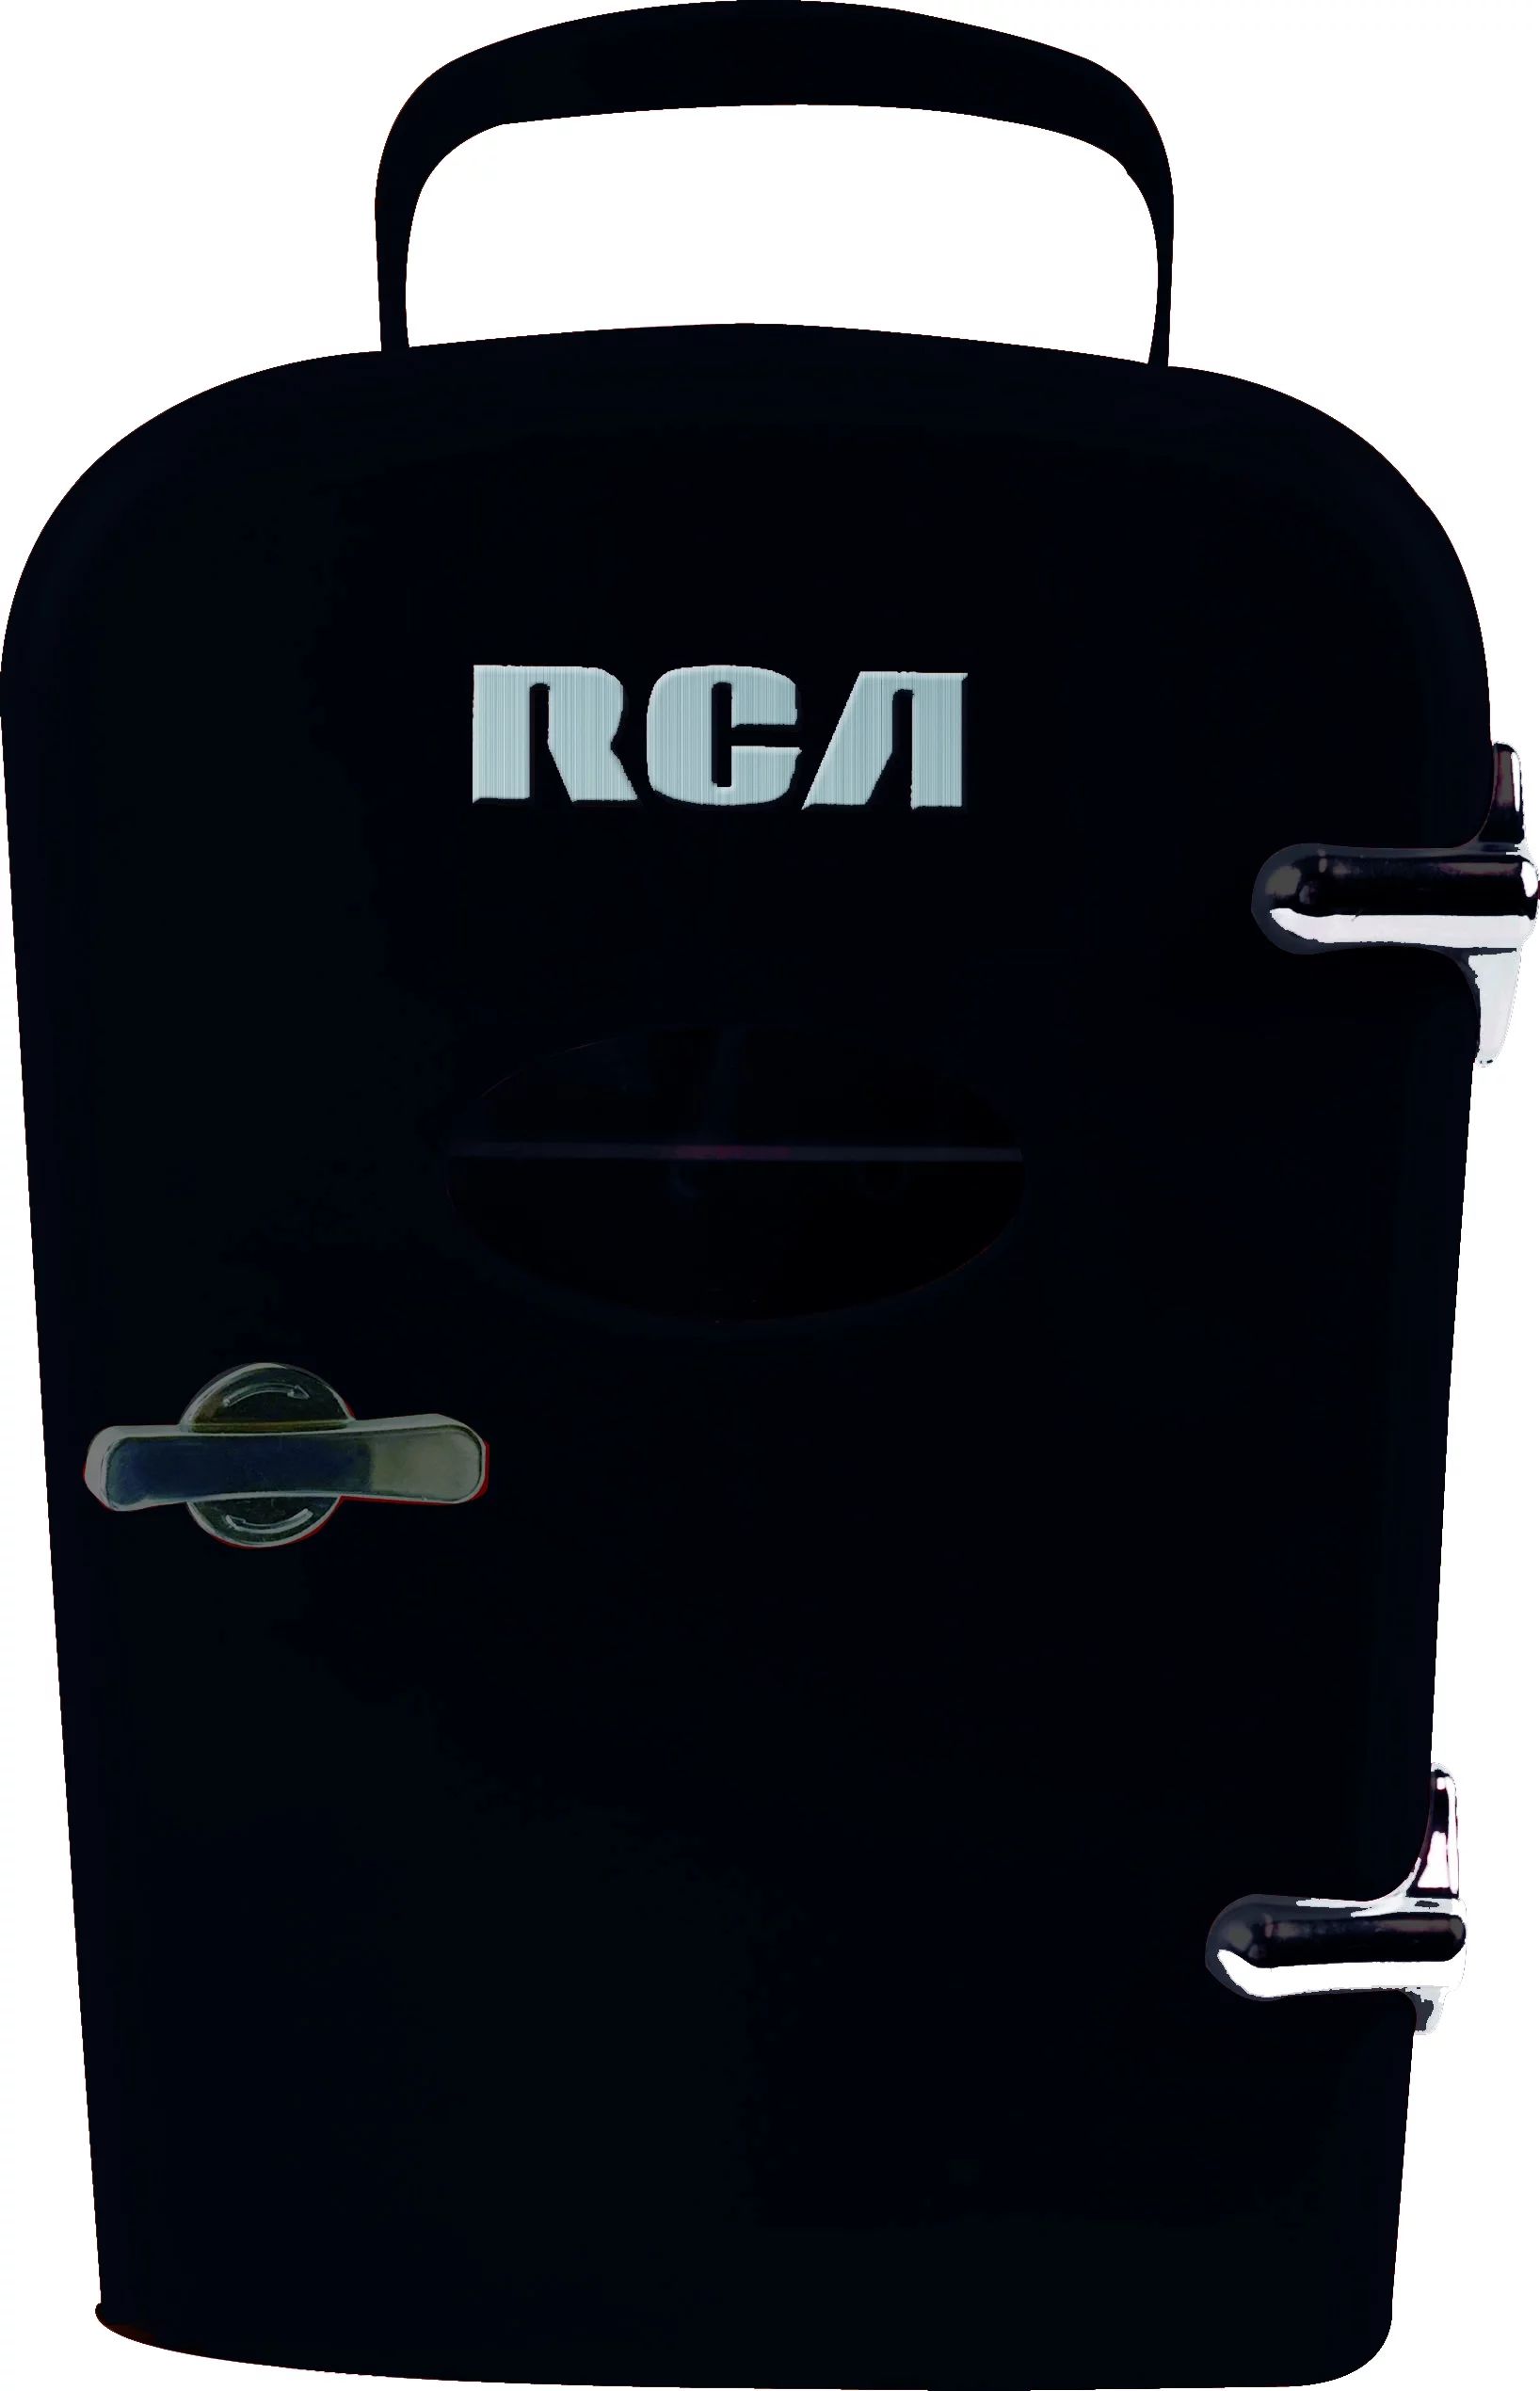 RCA Retro Portable 6 Can Beverage Fridge RMIS129, Black | Walmart (US)